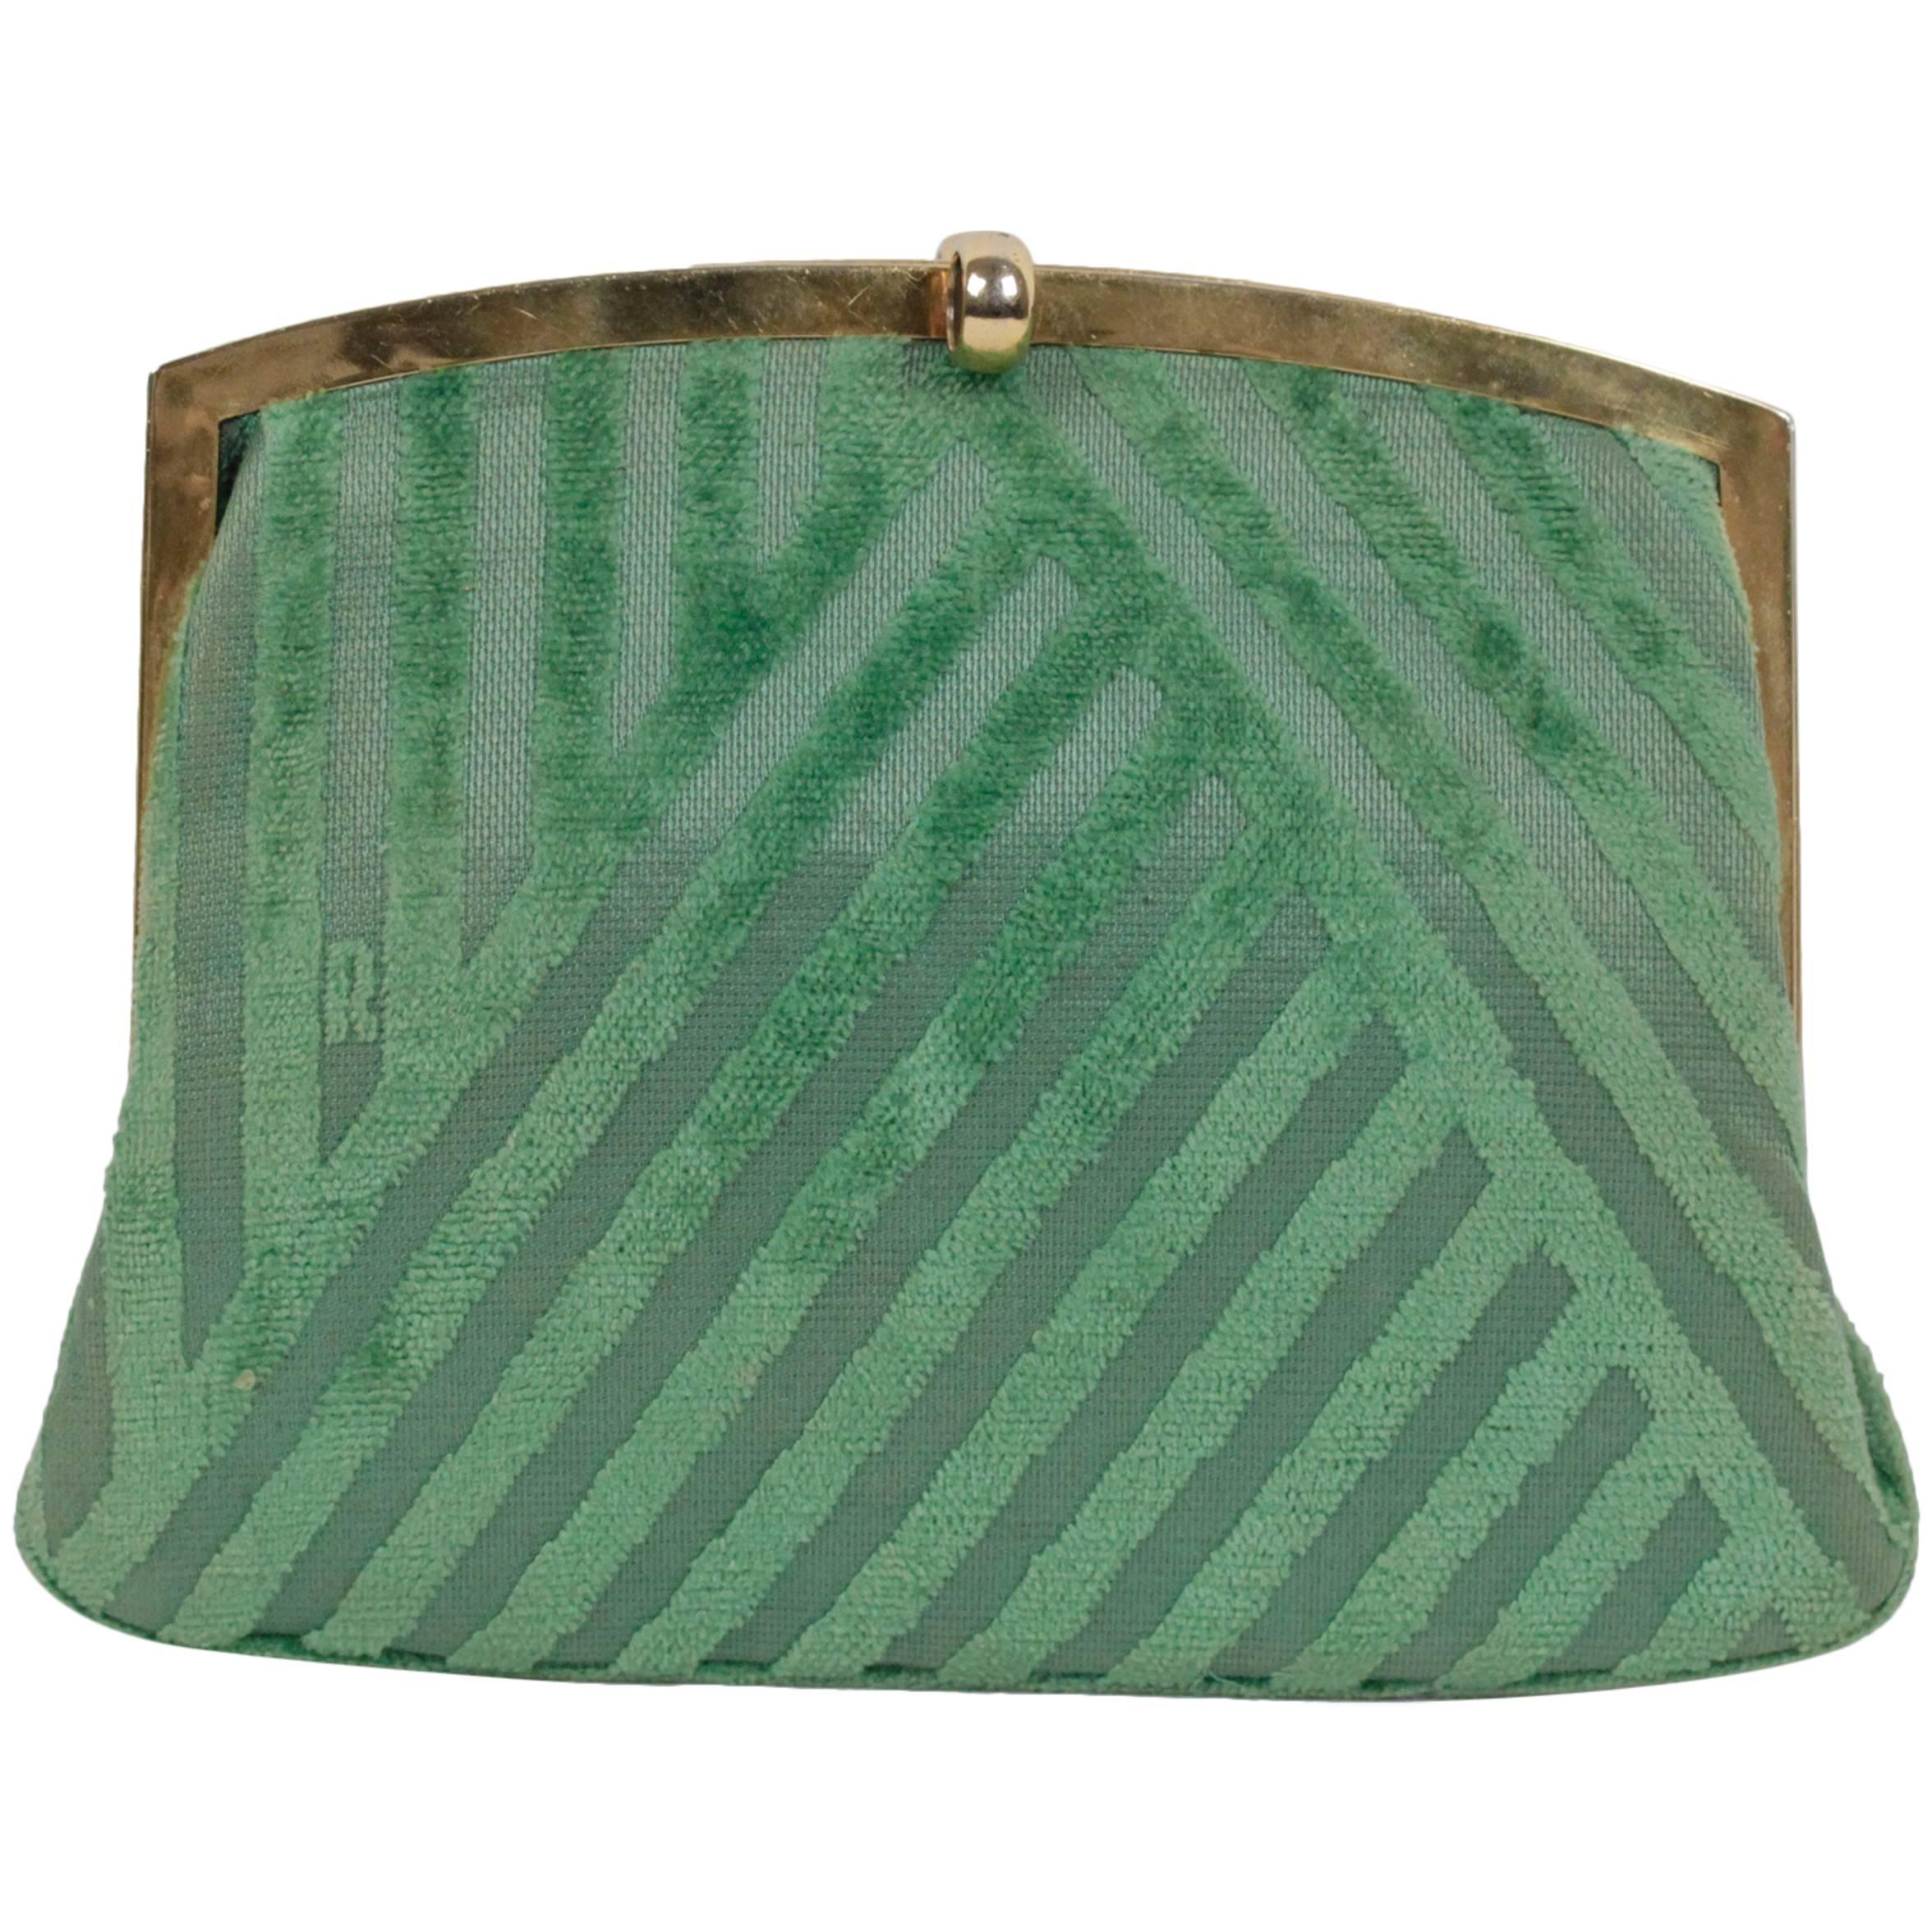 ROBERTA DI CAMERINO VINTAGE Green Cut Velvet CLUTCH Handbag PURSE MP